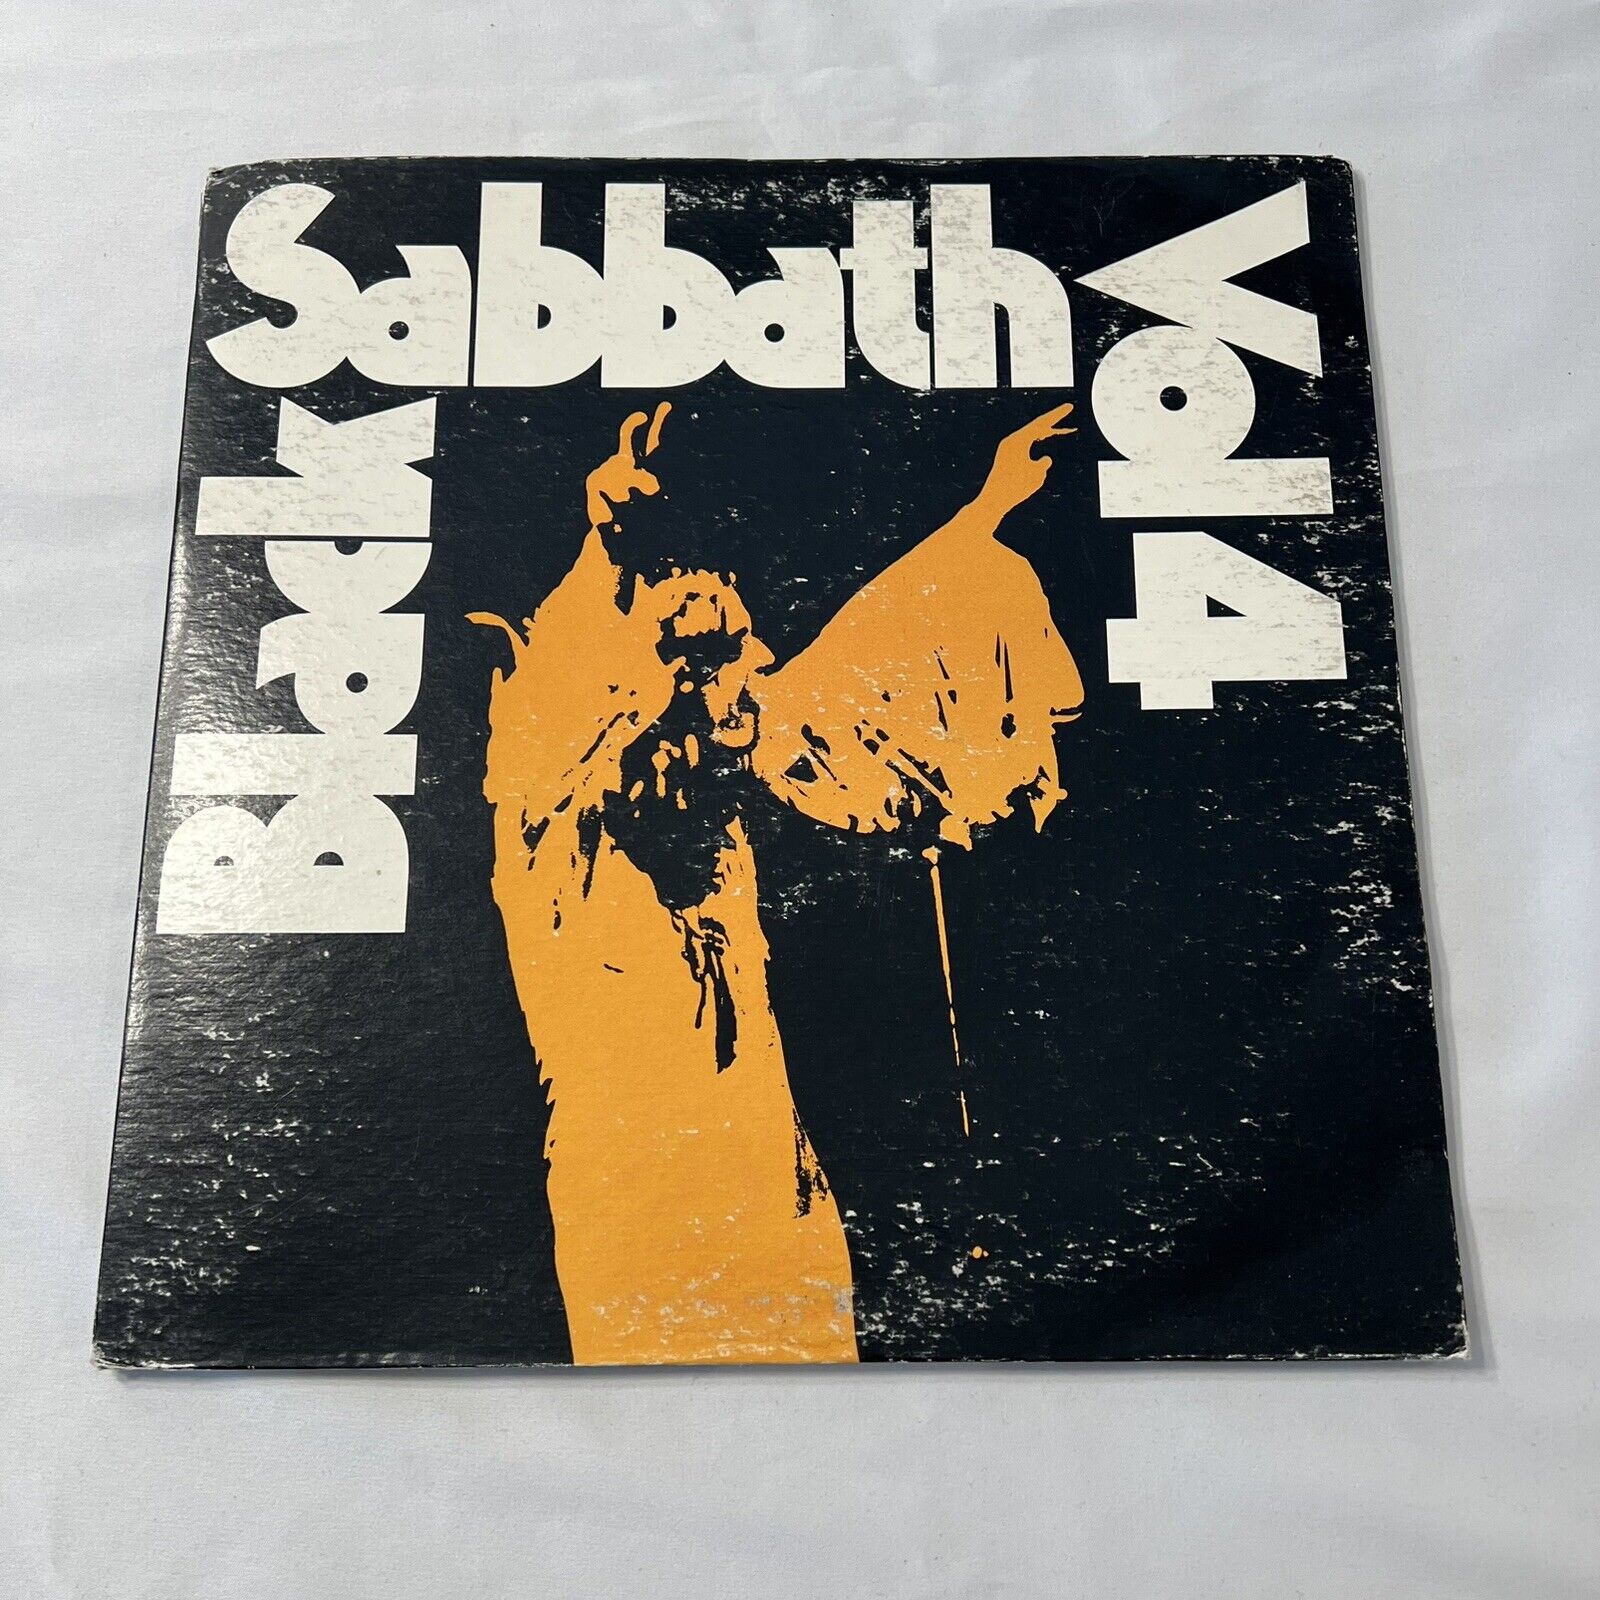 Black Sabbath Vinyl LP Vol. 4 by Black Sabbath Record Pre Owned